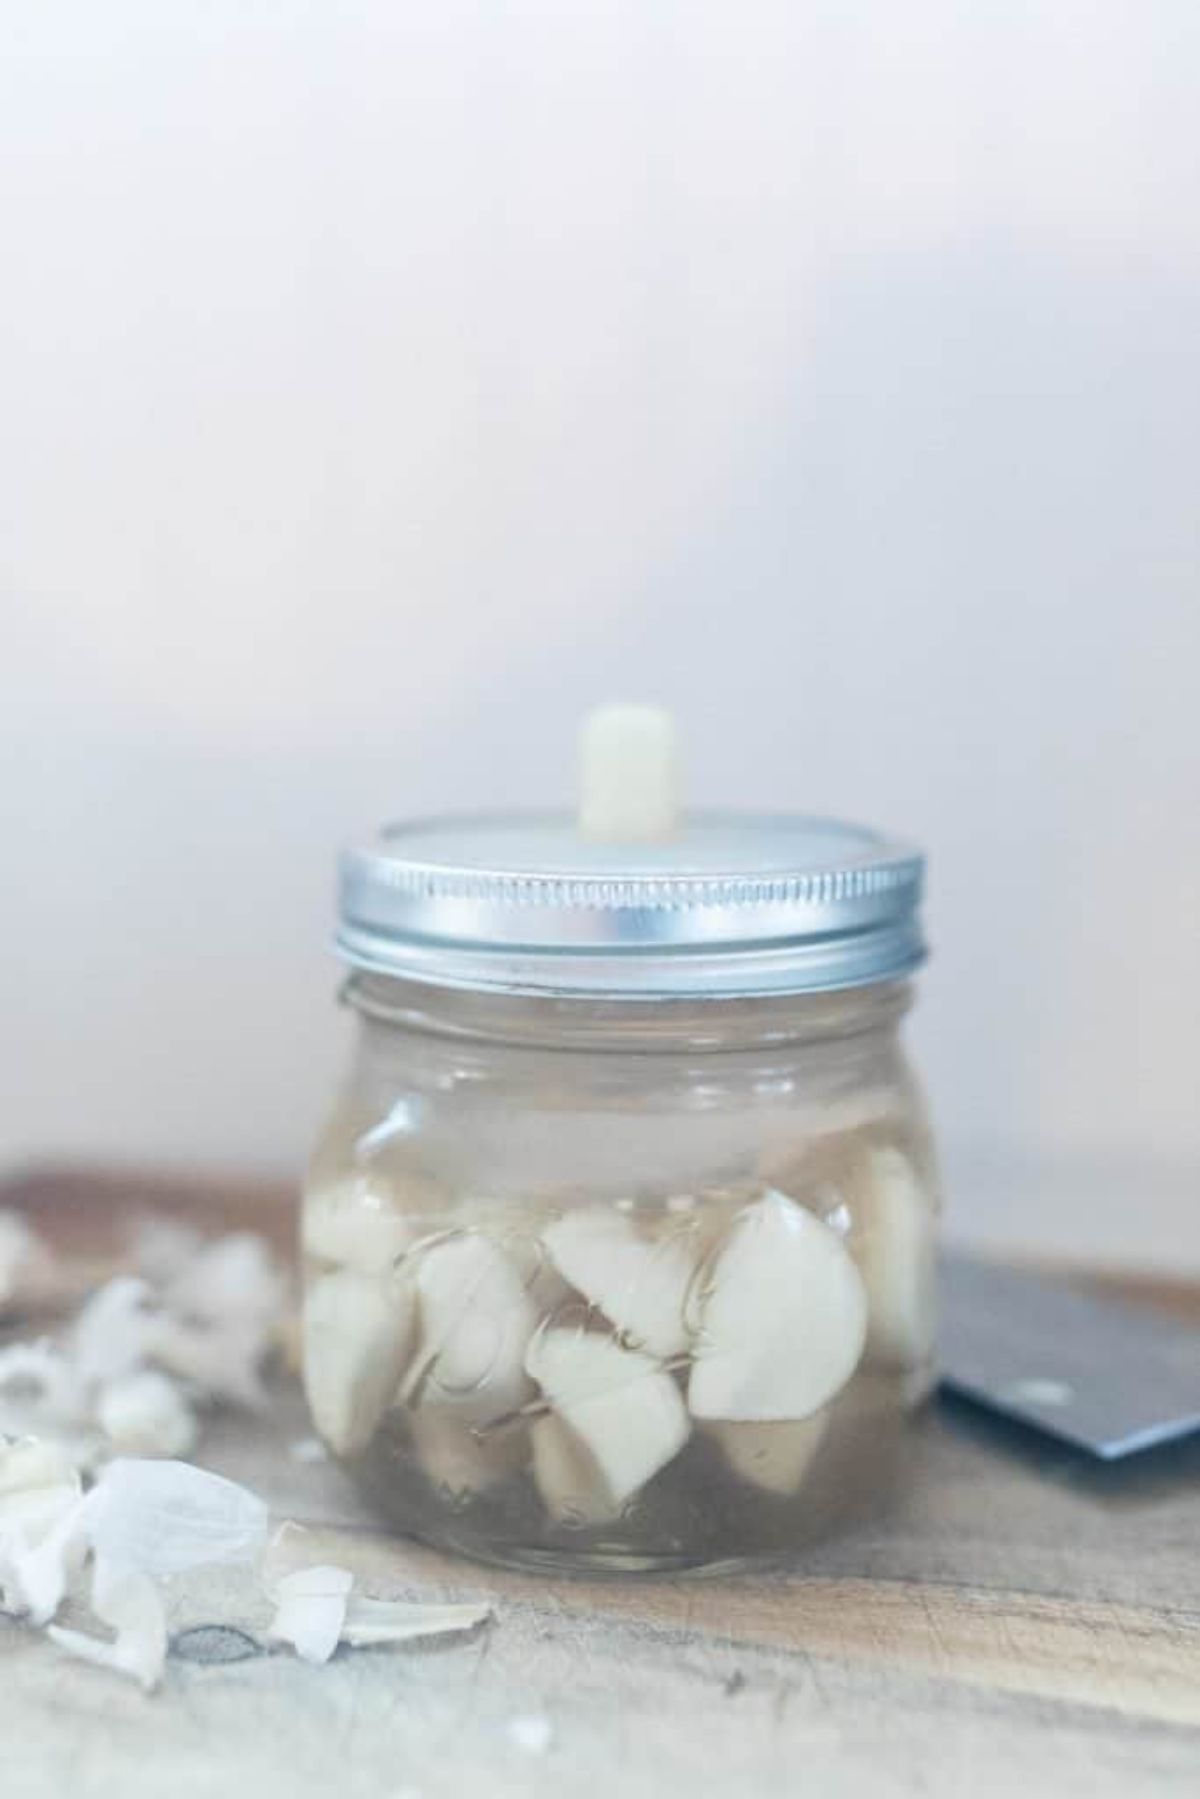 Lacto fermented garlic in a glass jar.